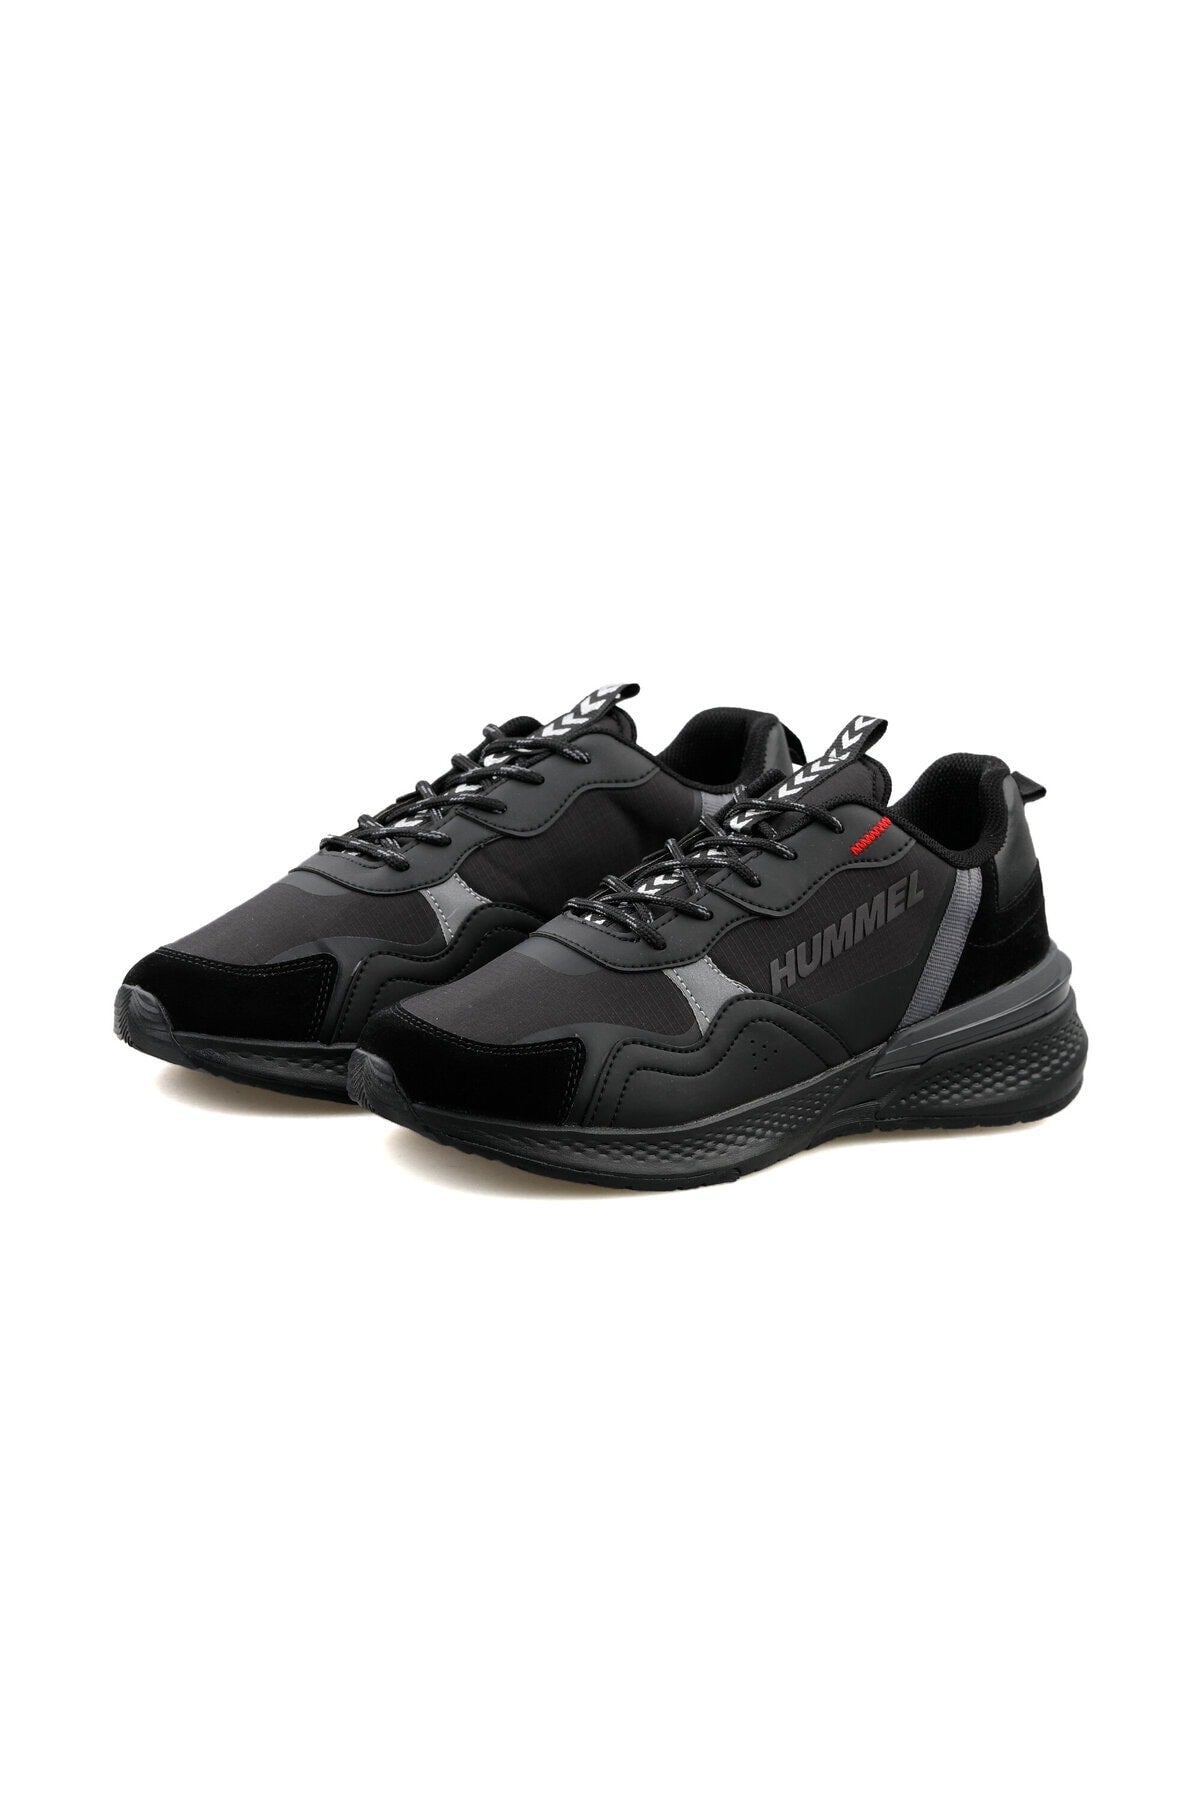 Hml Xuma Men's Casual Shoes 900136-2001 Black